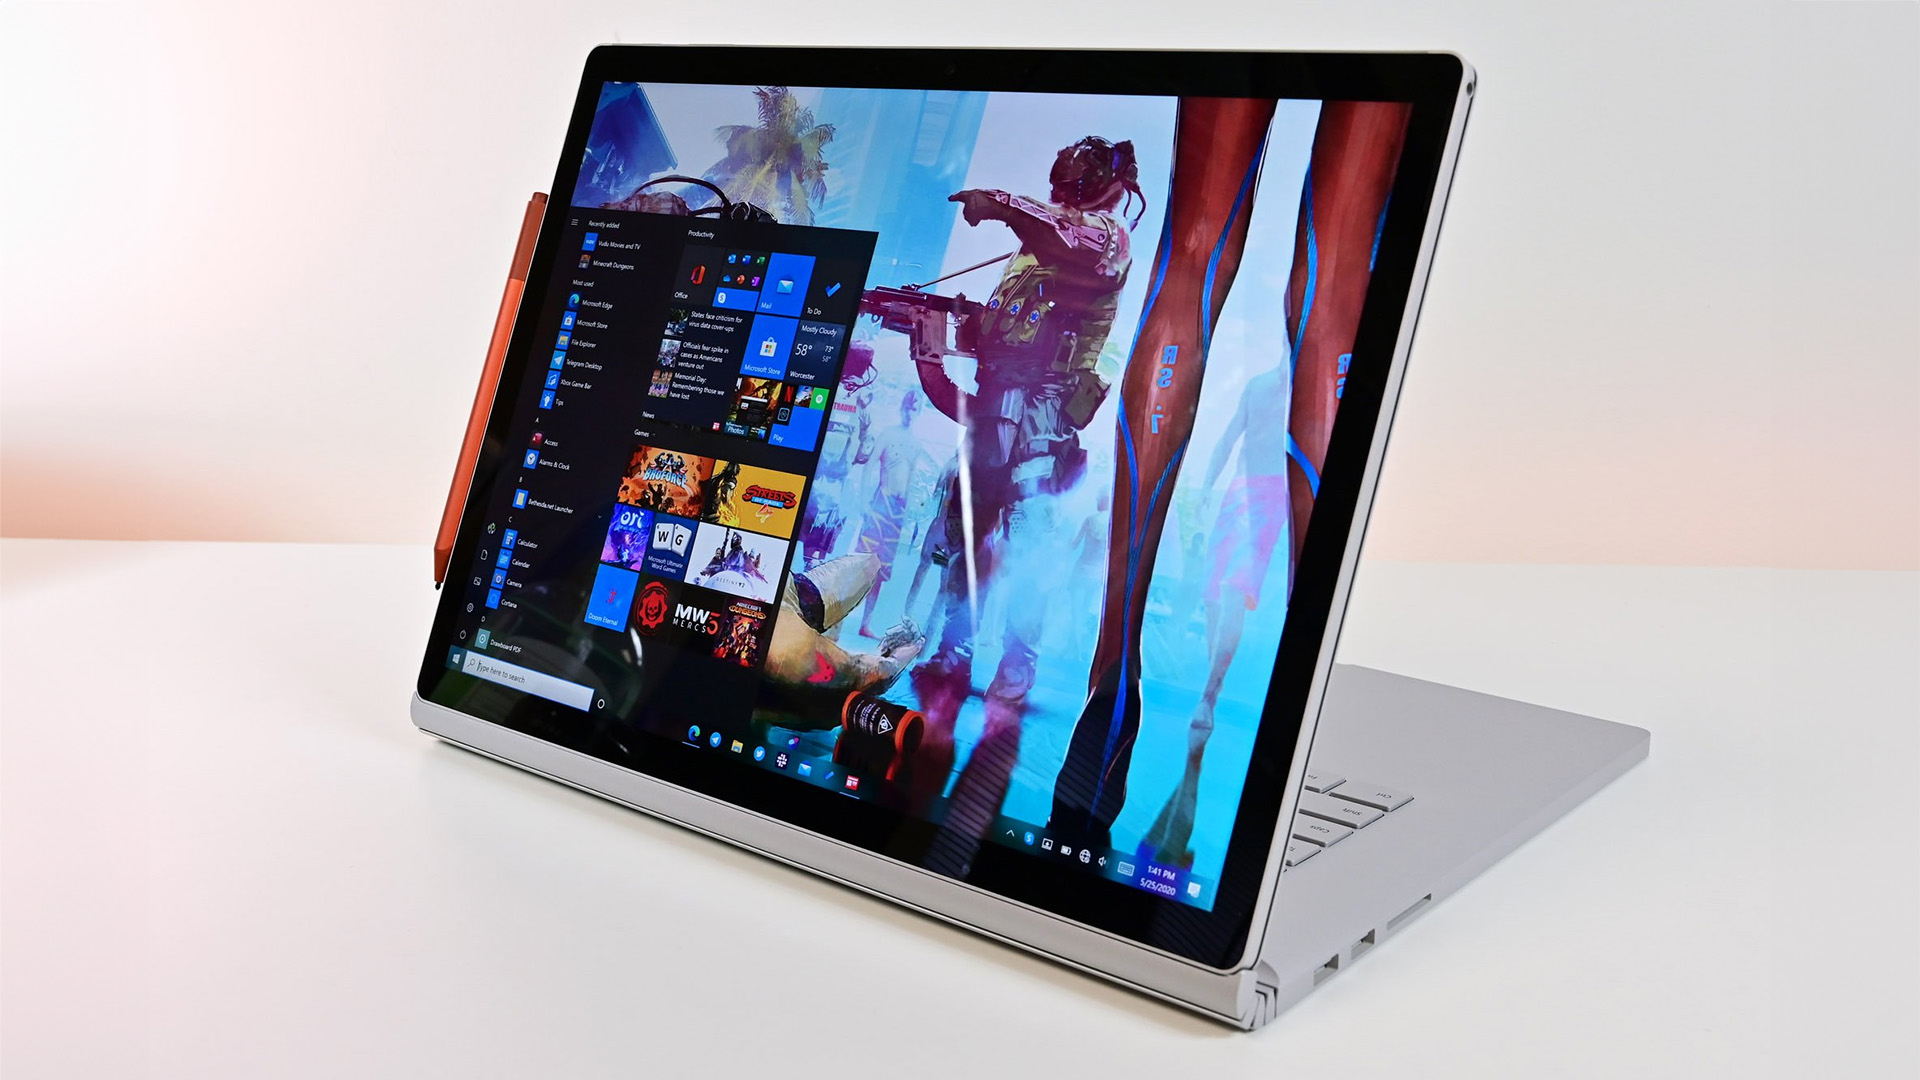 New Microsoft Surface Book 3 - 13.5 Touch-Screen - 10th Gen Intel Core i5  - 8GB Memory - 256GB SSD (Latest Model) - Platinum